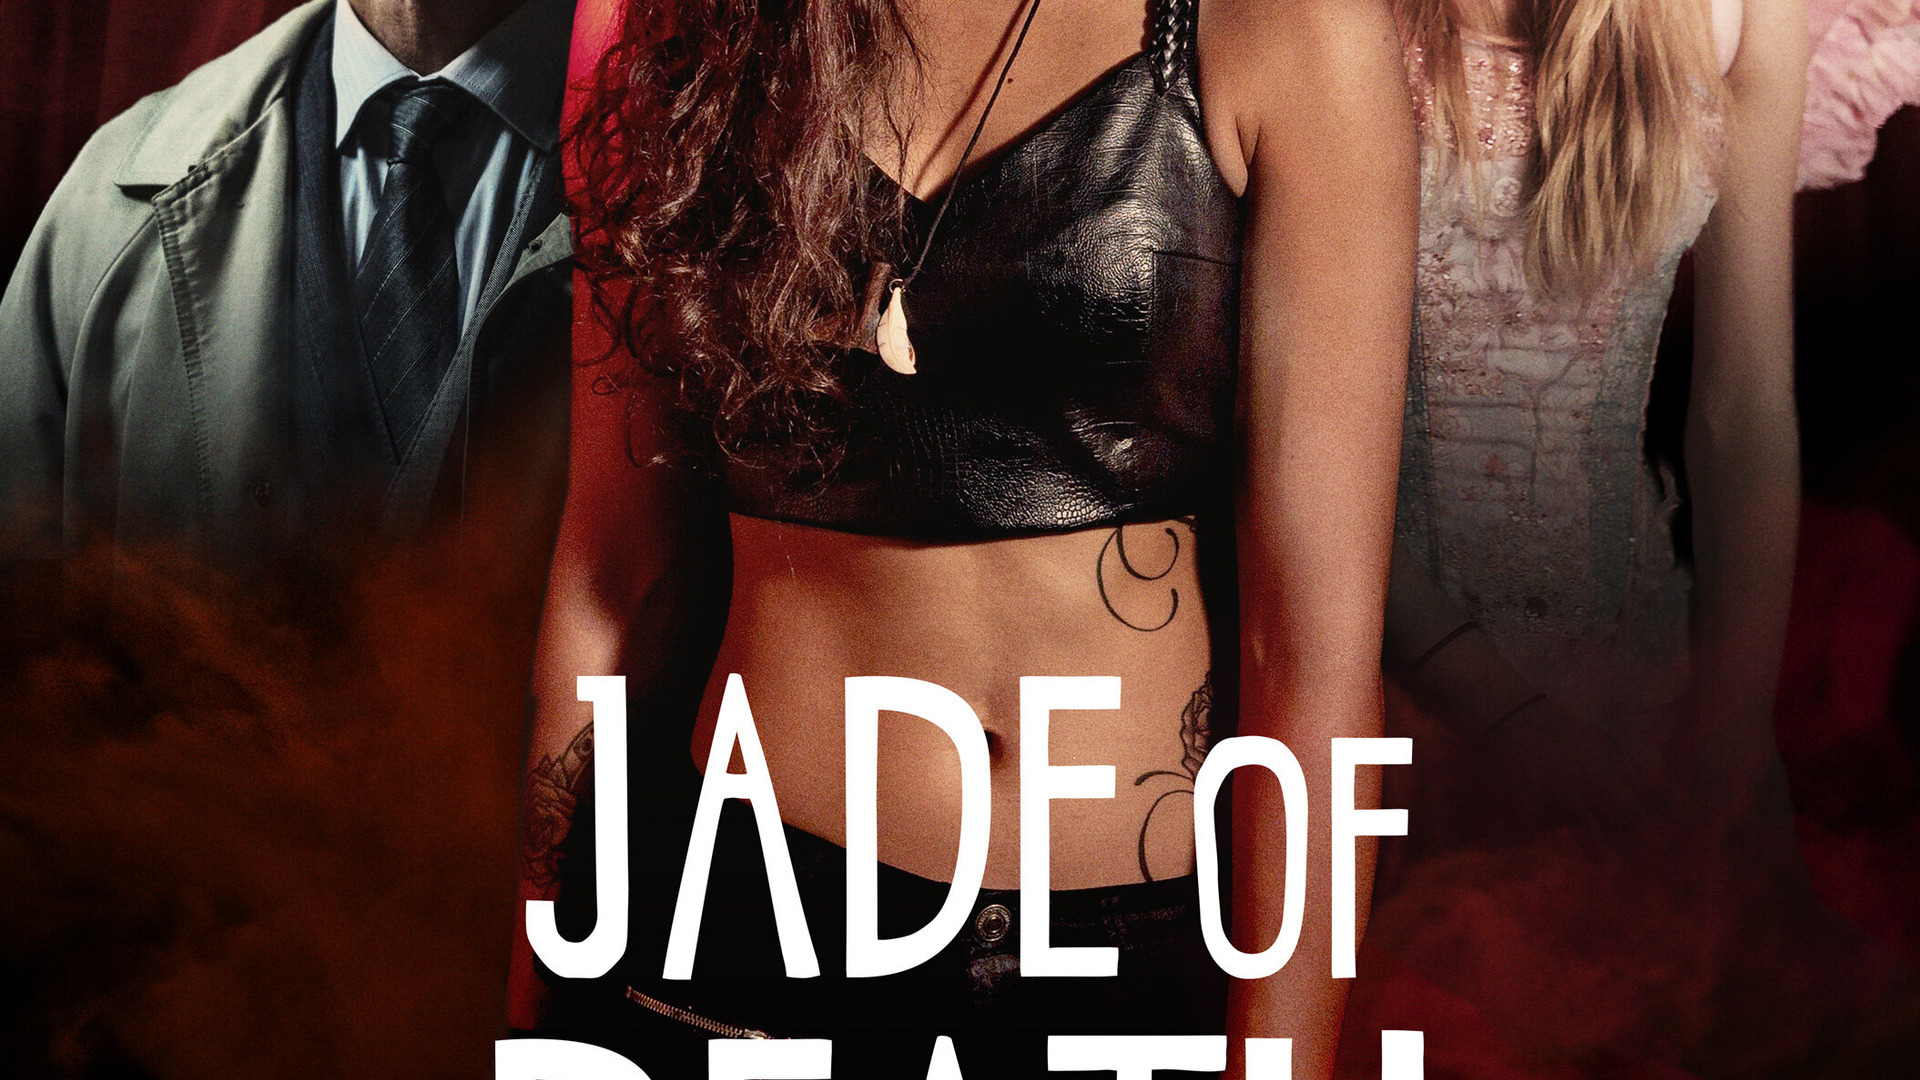 Show Jade of Death